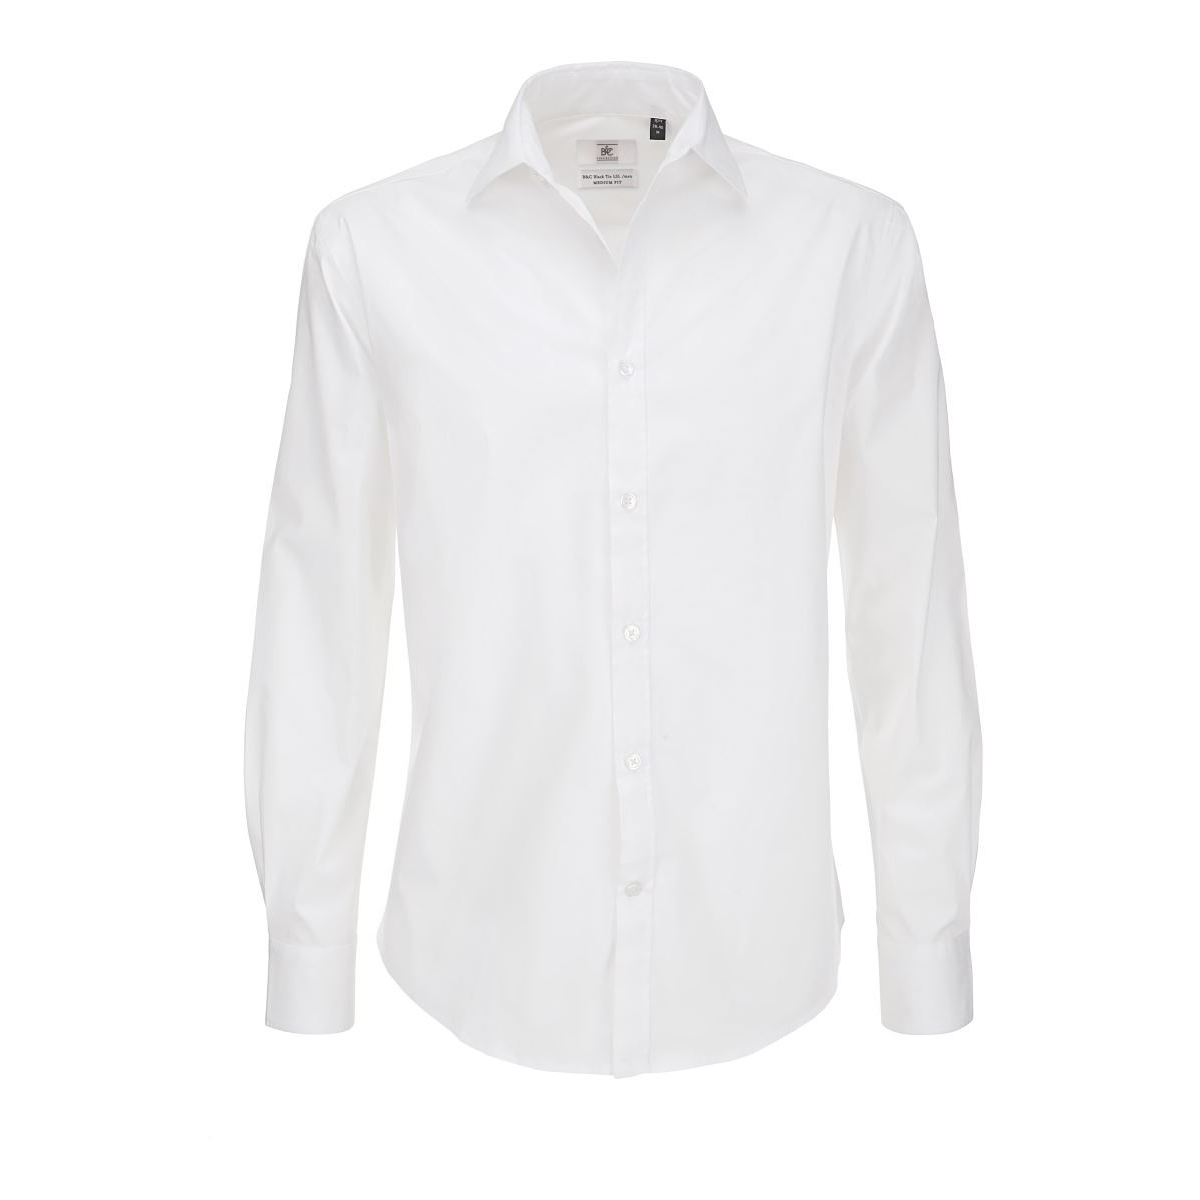 Pánská popelínová košile B&C Black Tie s dlouhým rukávem - bílá, 4XL